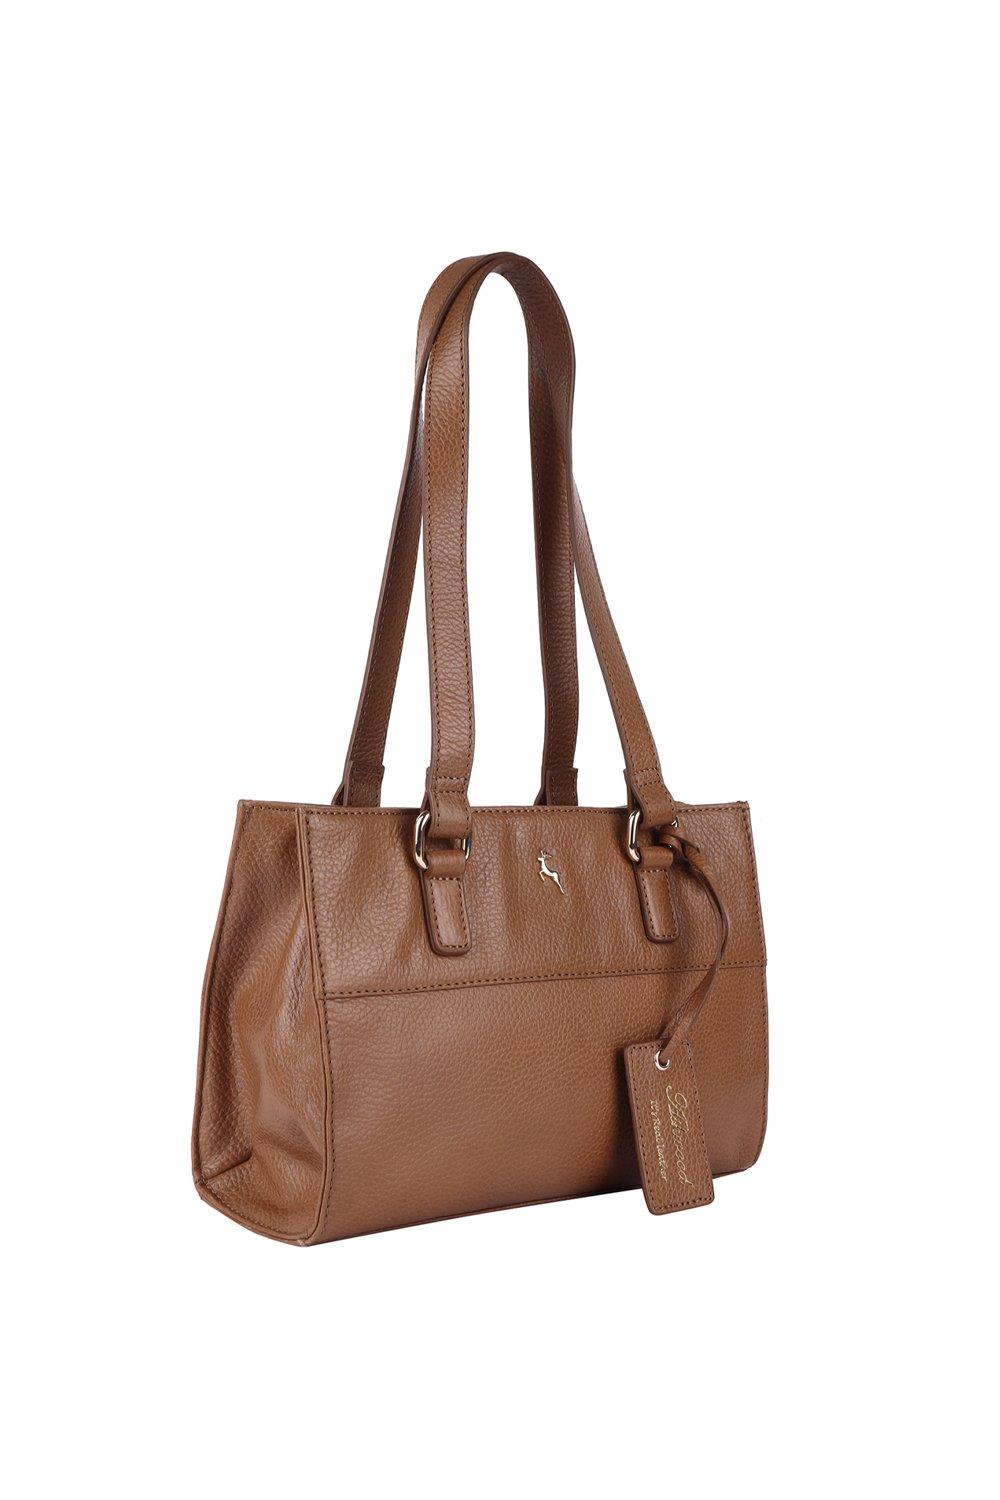 Debenhams launch HUGE handbag sale with 70% off designer items - Birmingham  Live